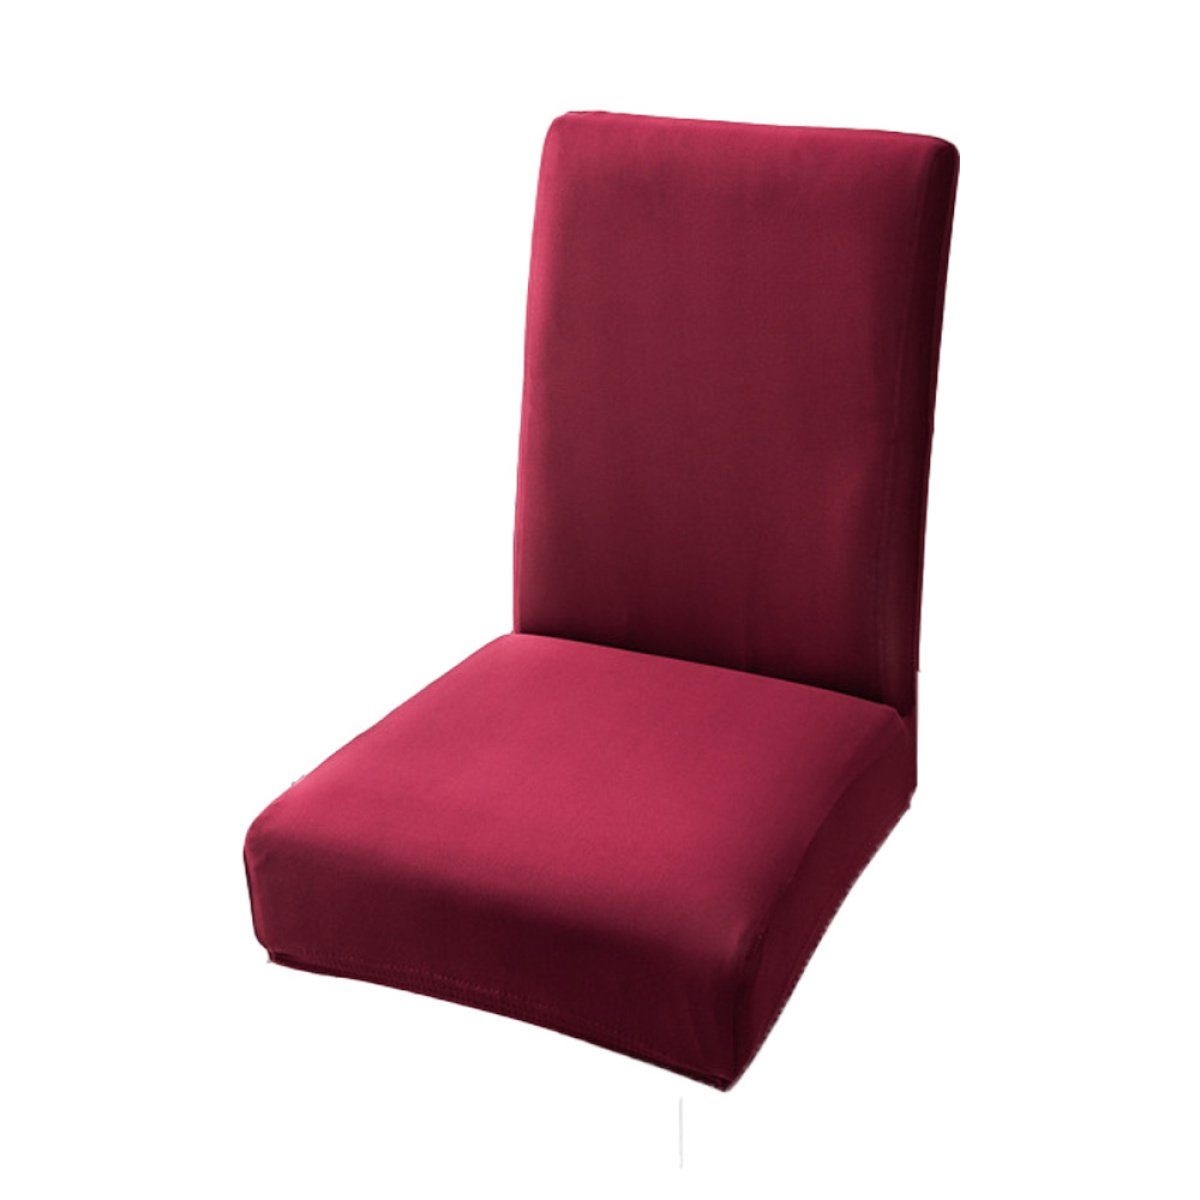 Stuhlhusse Stuhlhussen Universal Stretch Abnehmbare Stuhlbezug für Deko, Juoungle rot